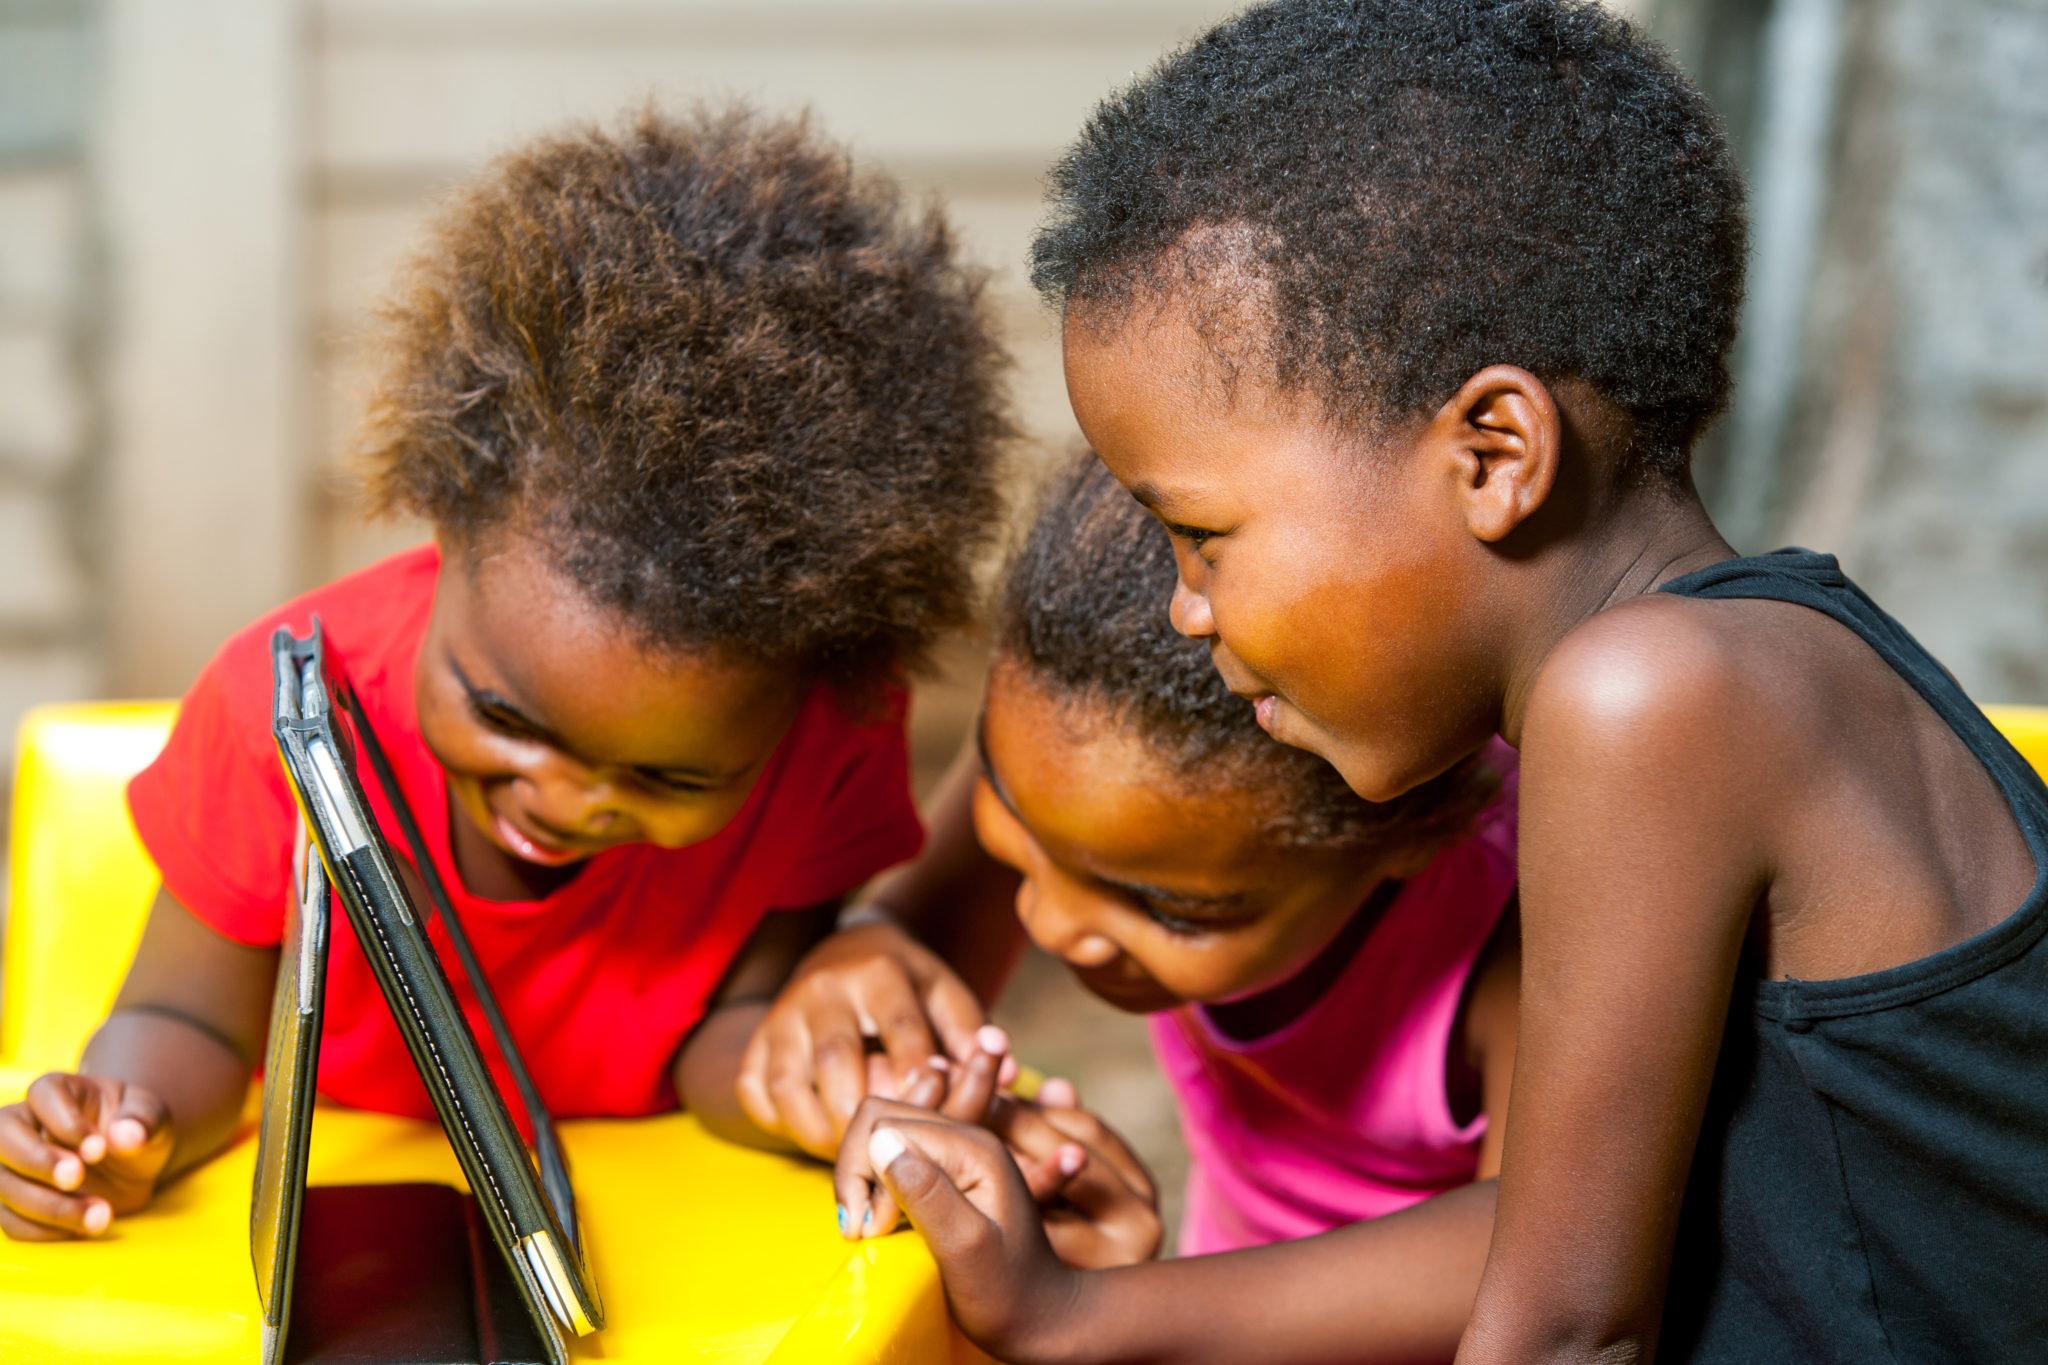 Moodle empowers educators in Rwanda, East Africa Image